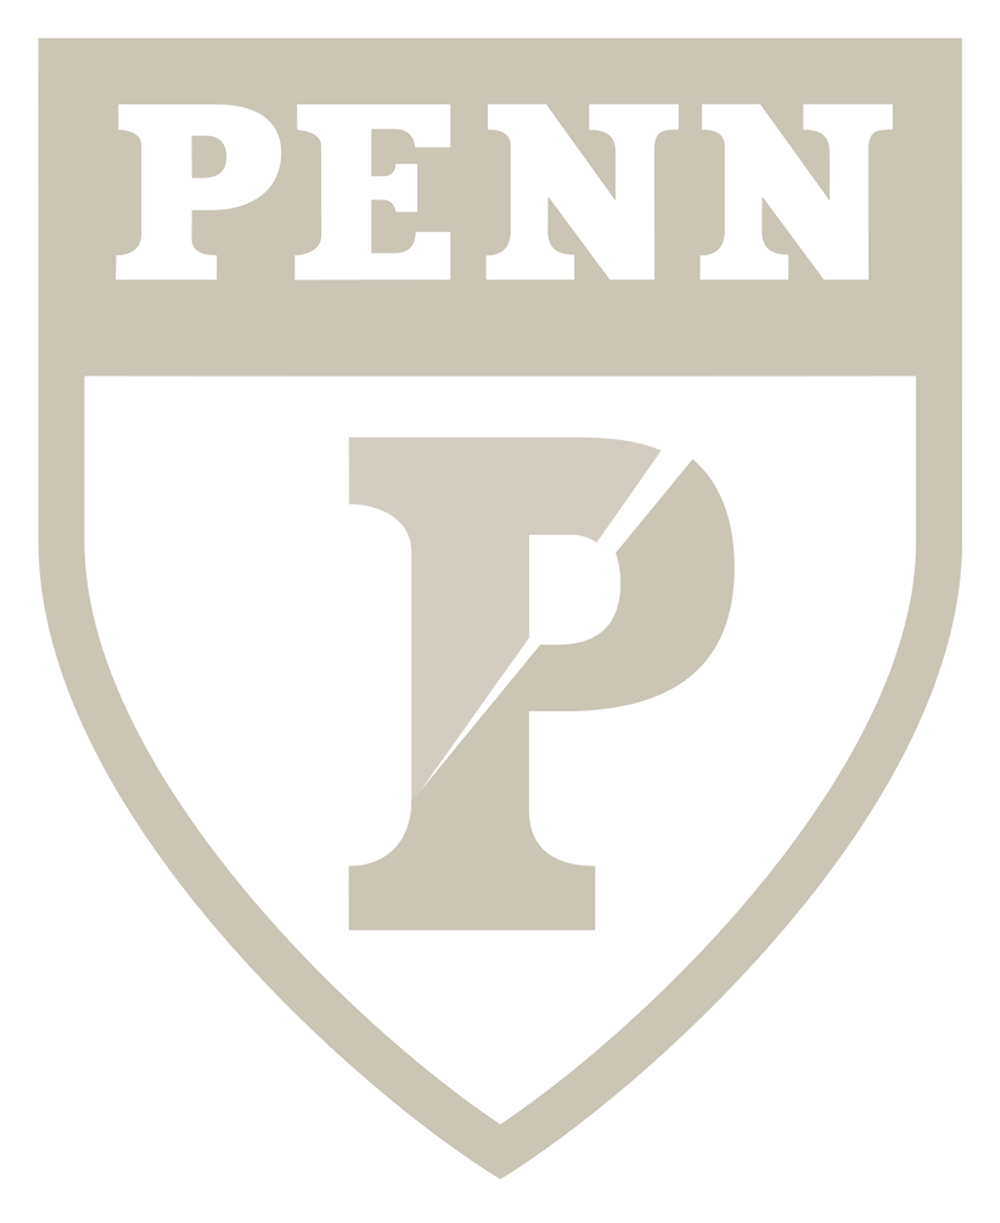 Penn University Logo